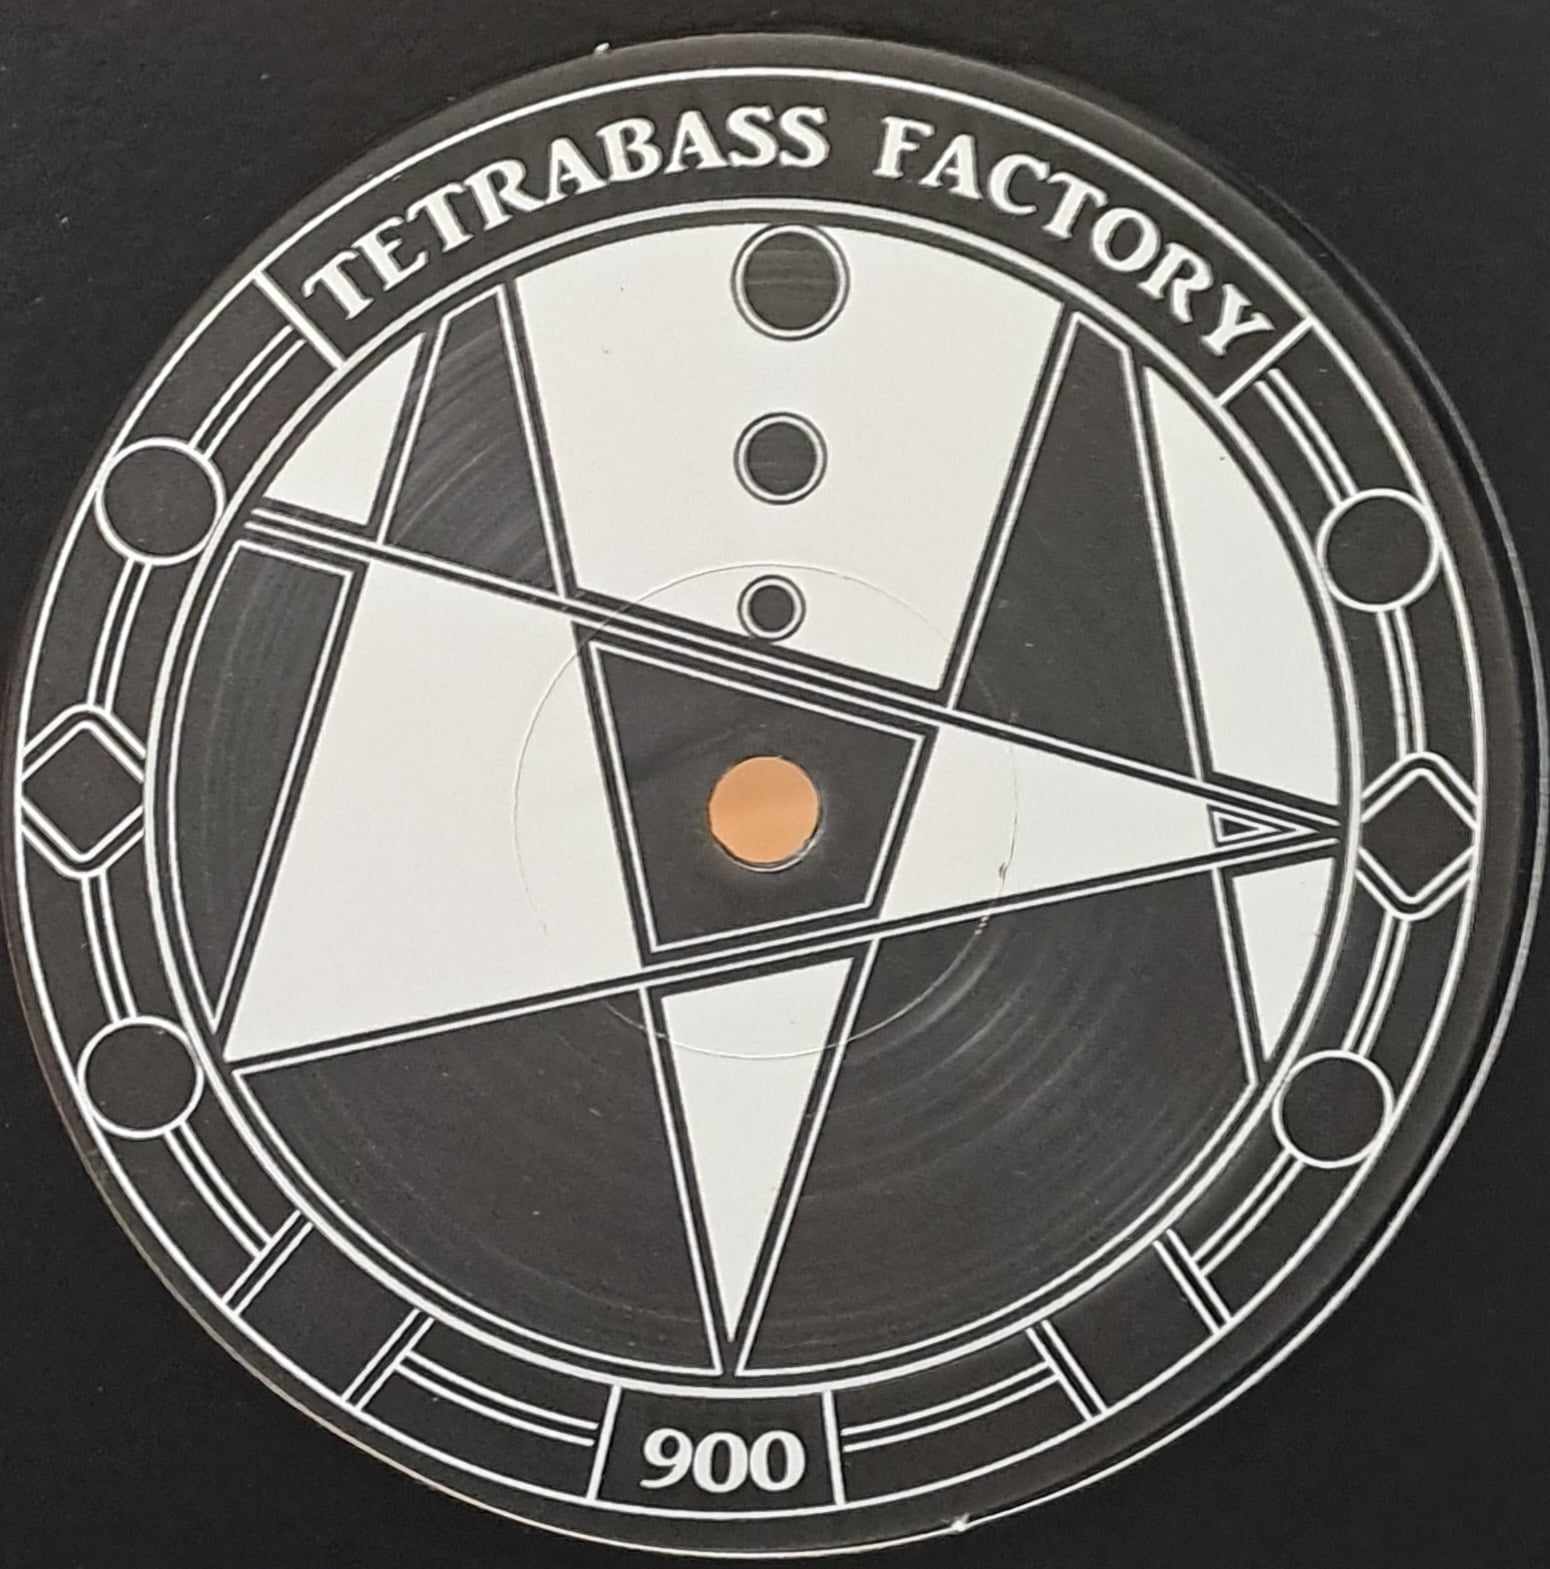 Tetrabass Factory 006 (dernières copies en stock) - vinyle freetekno